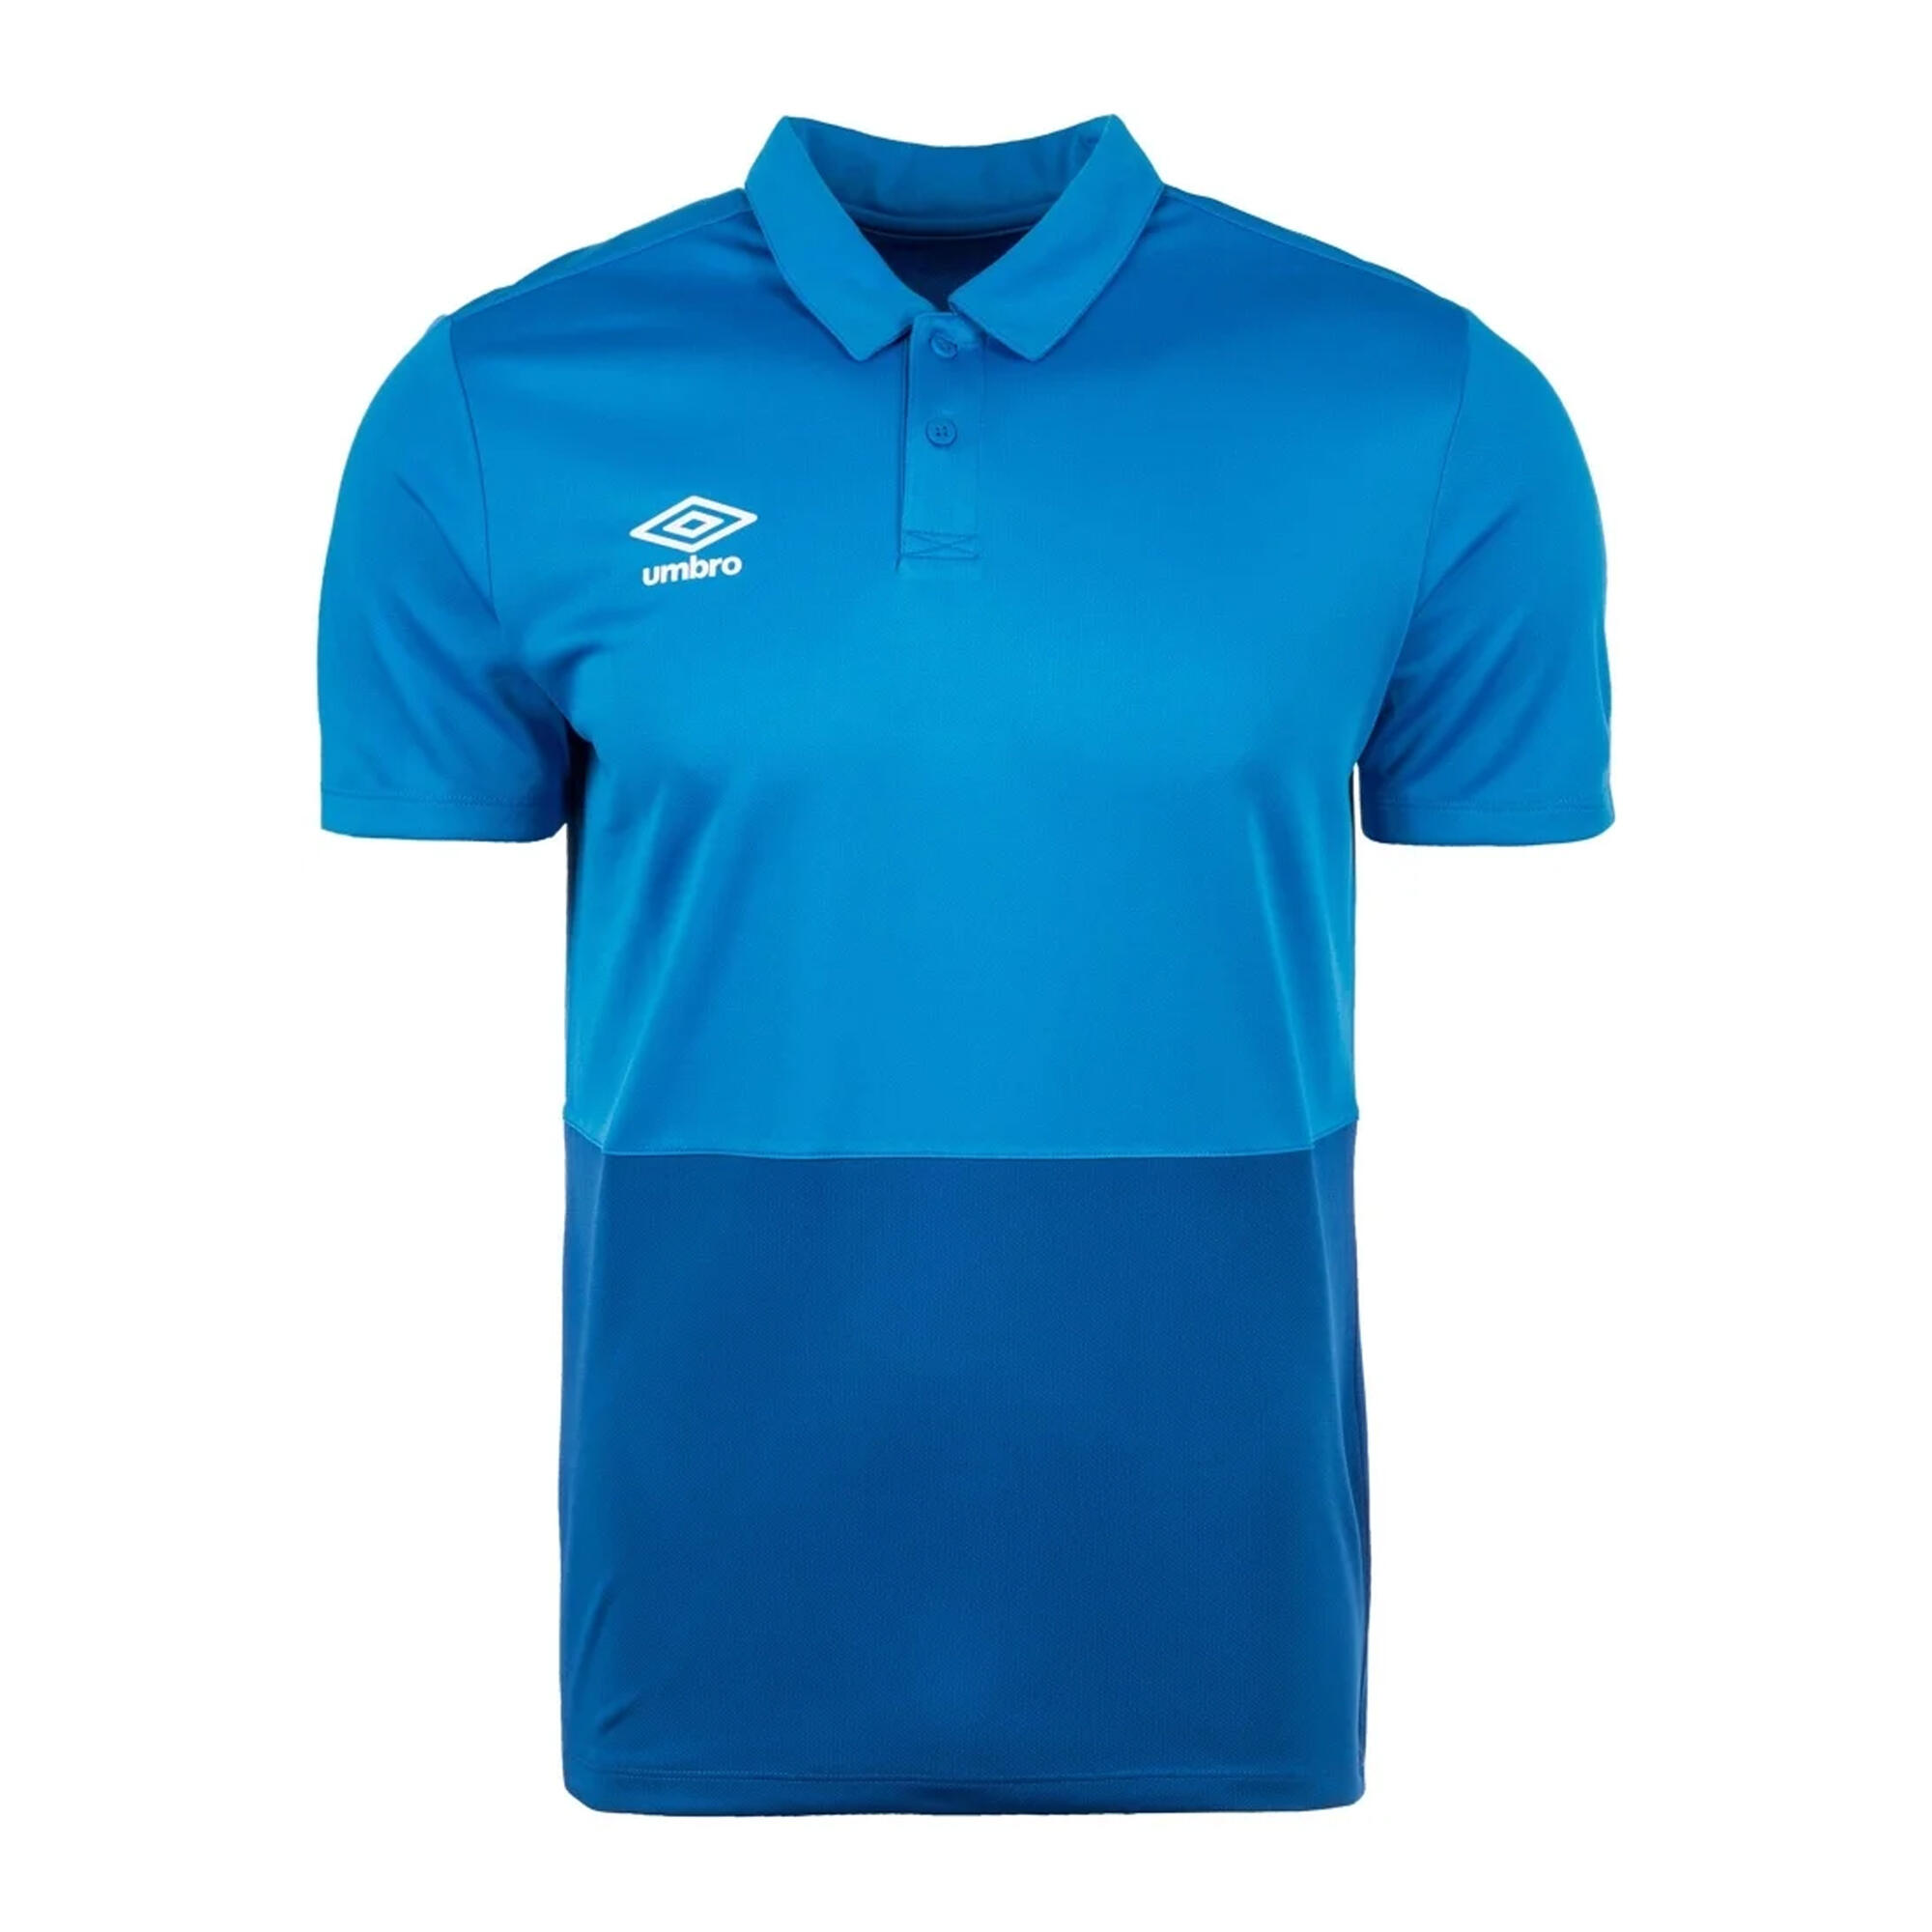 UMBRO Mens Polyester Polo Shirt (Royal Blue/French Blue)